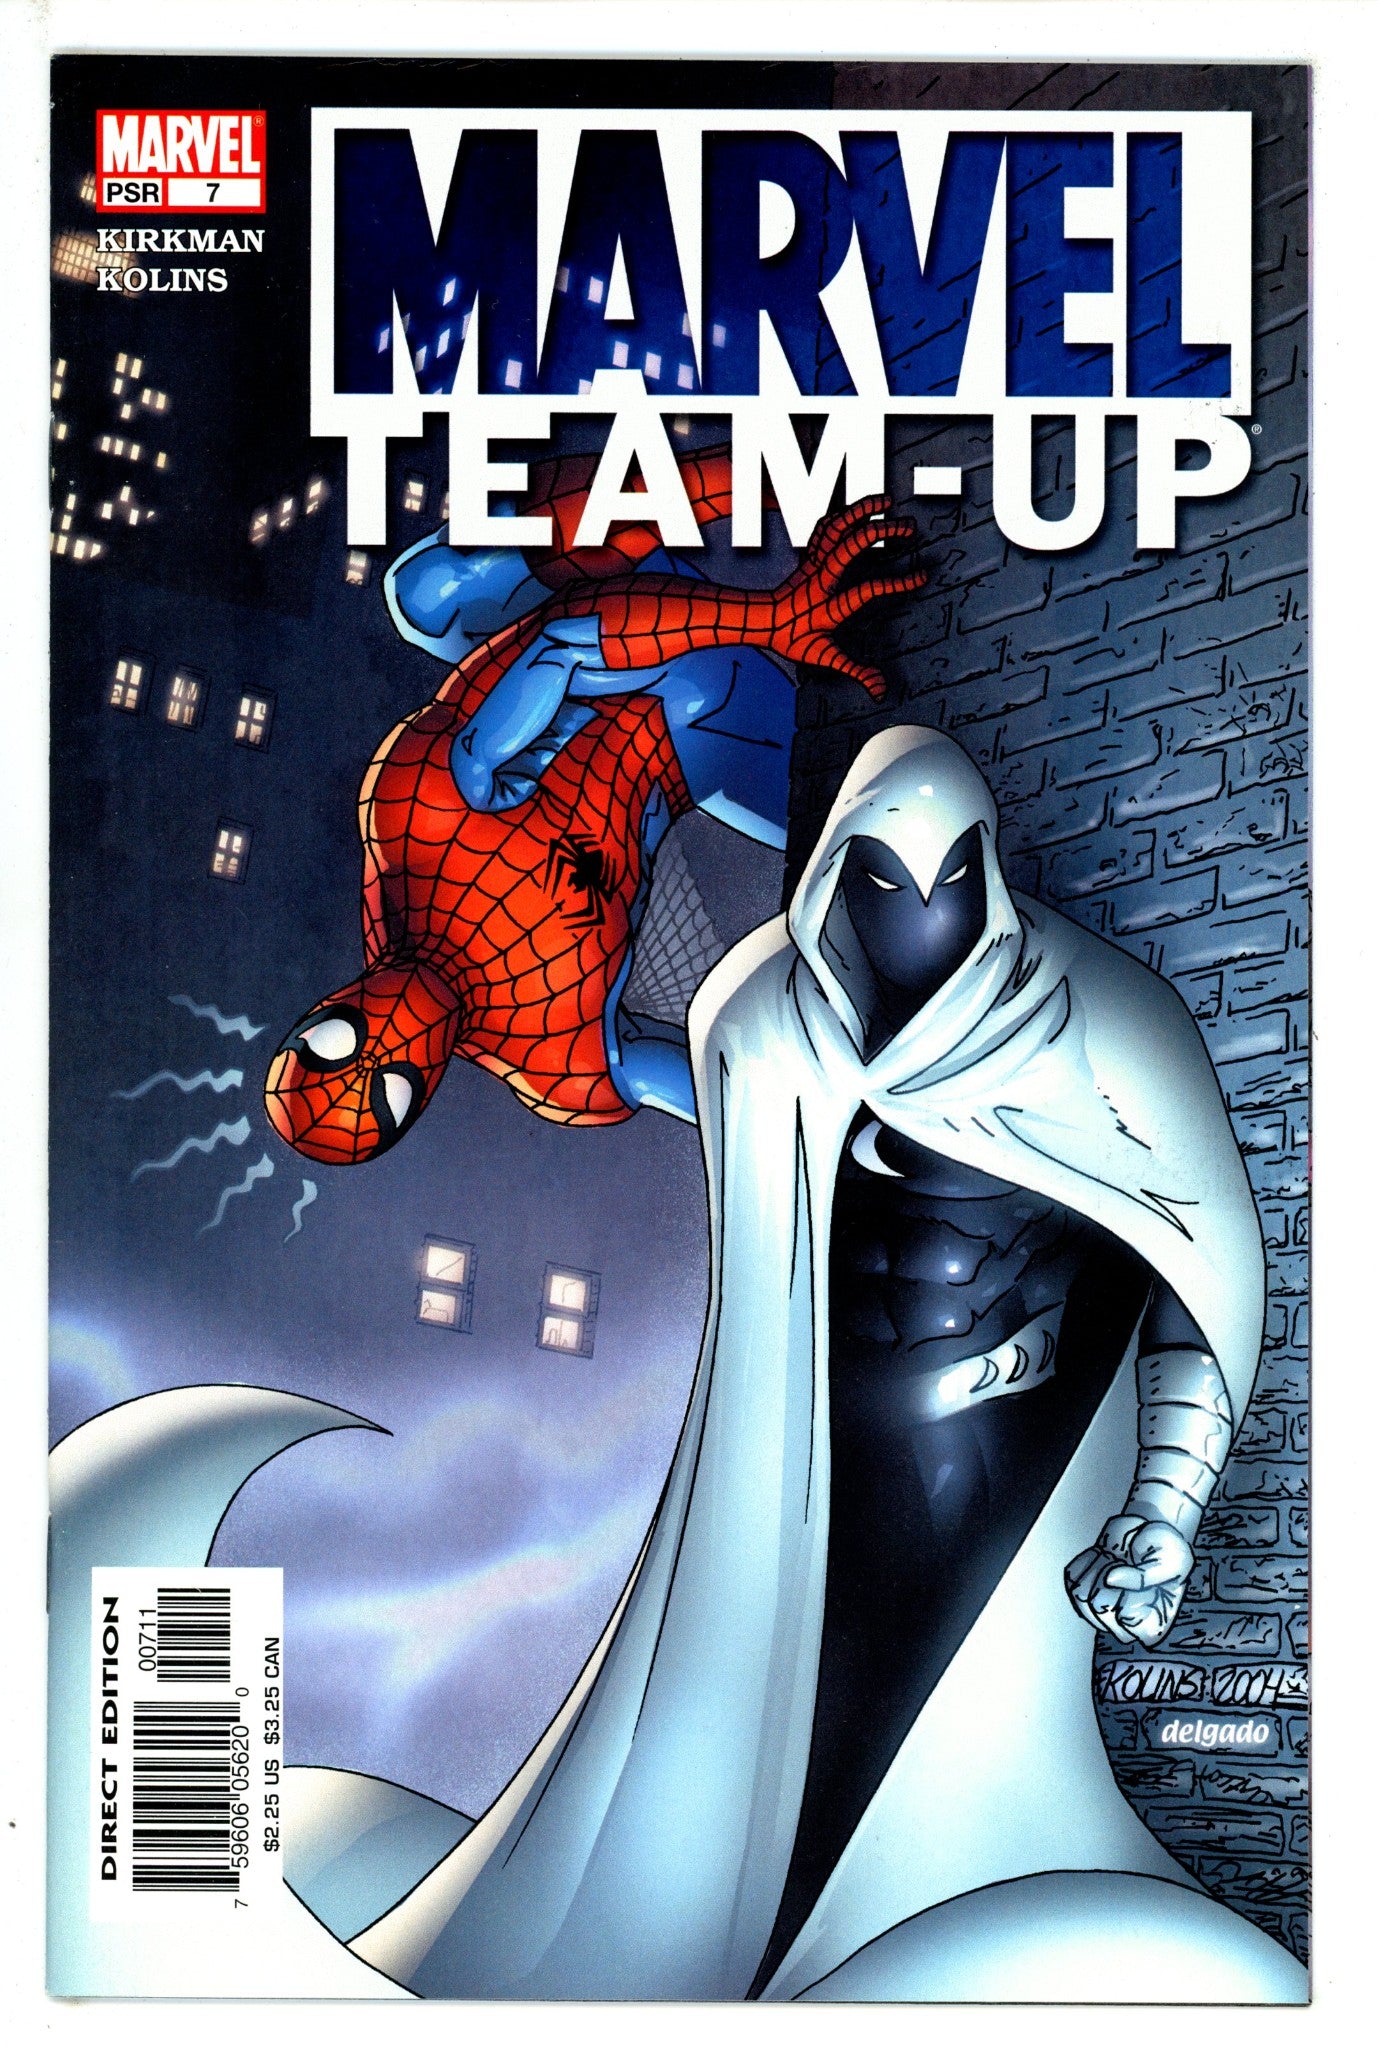 Marvel Team-Up Vol 3 7 NM- (2005)